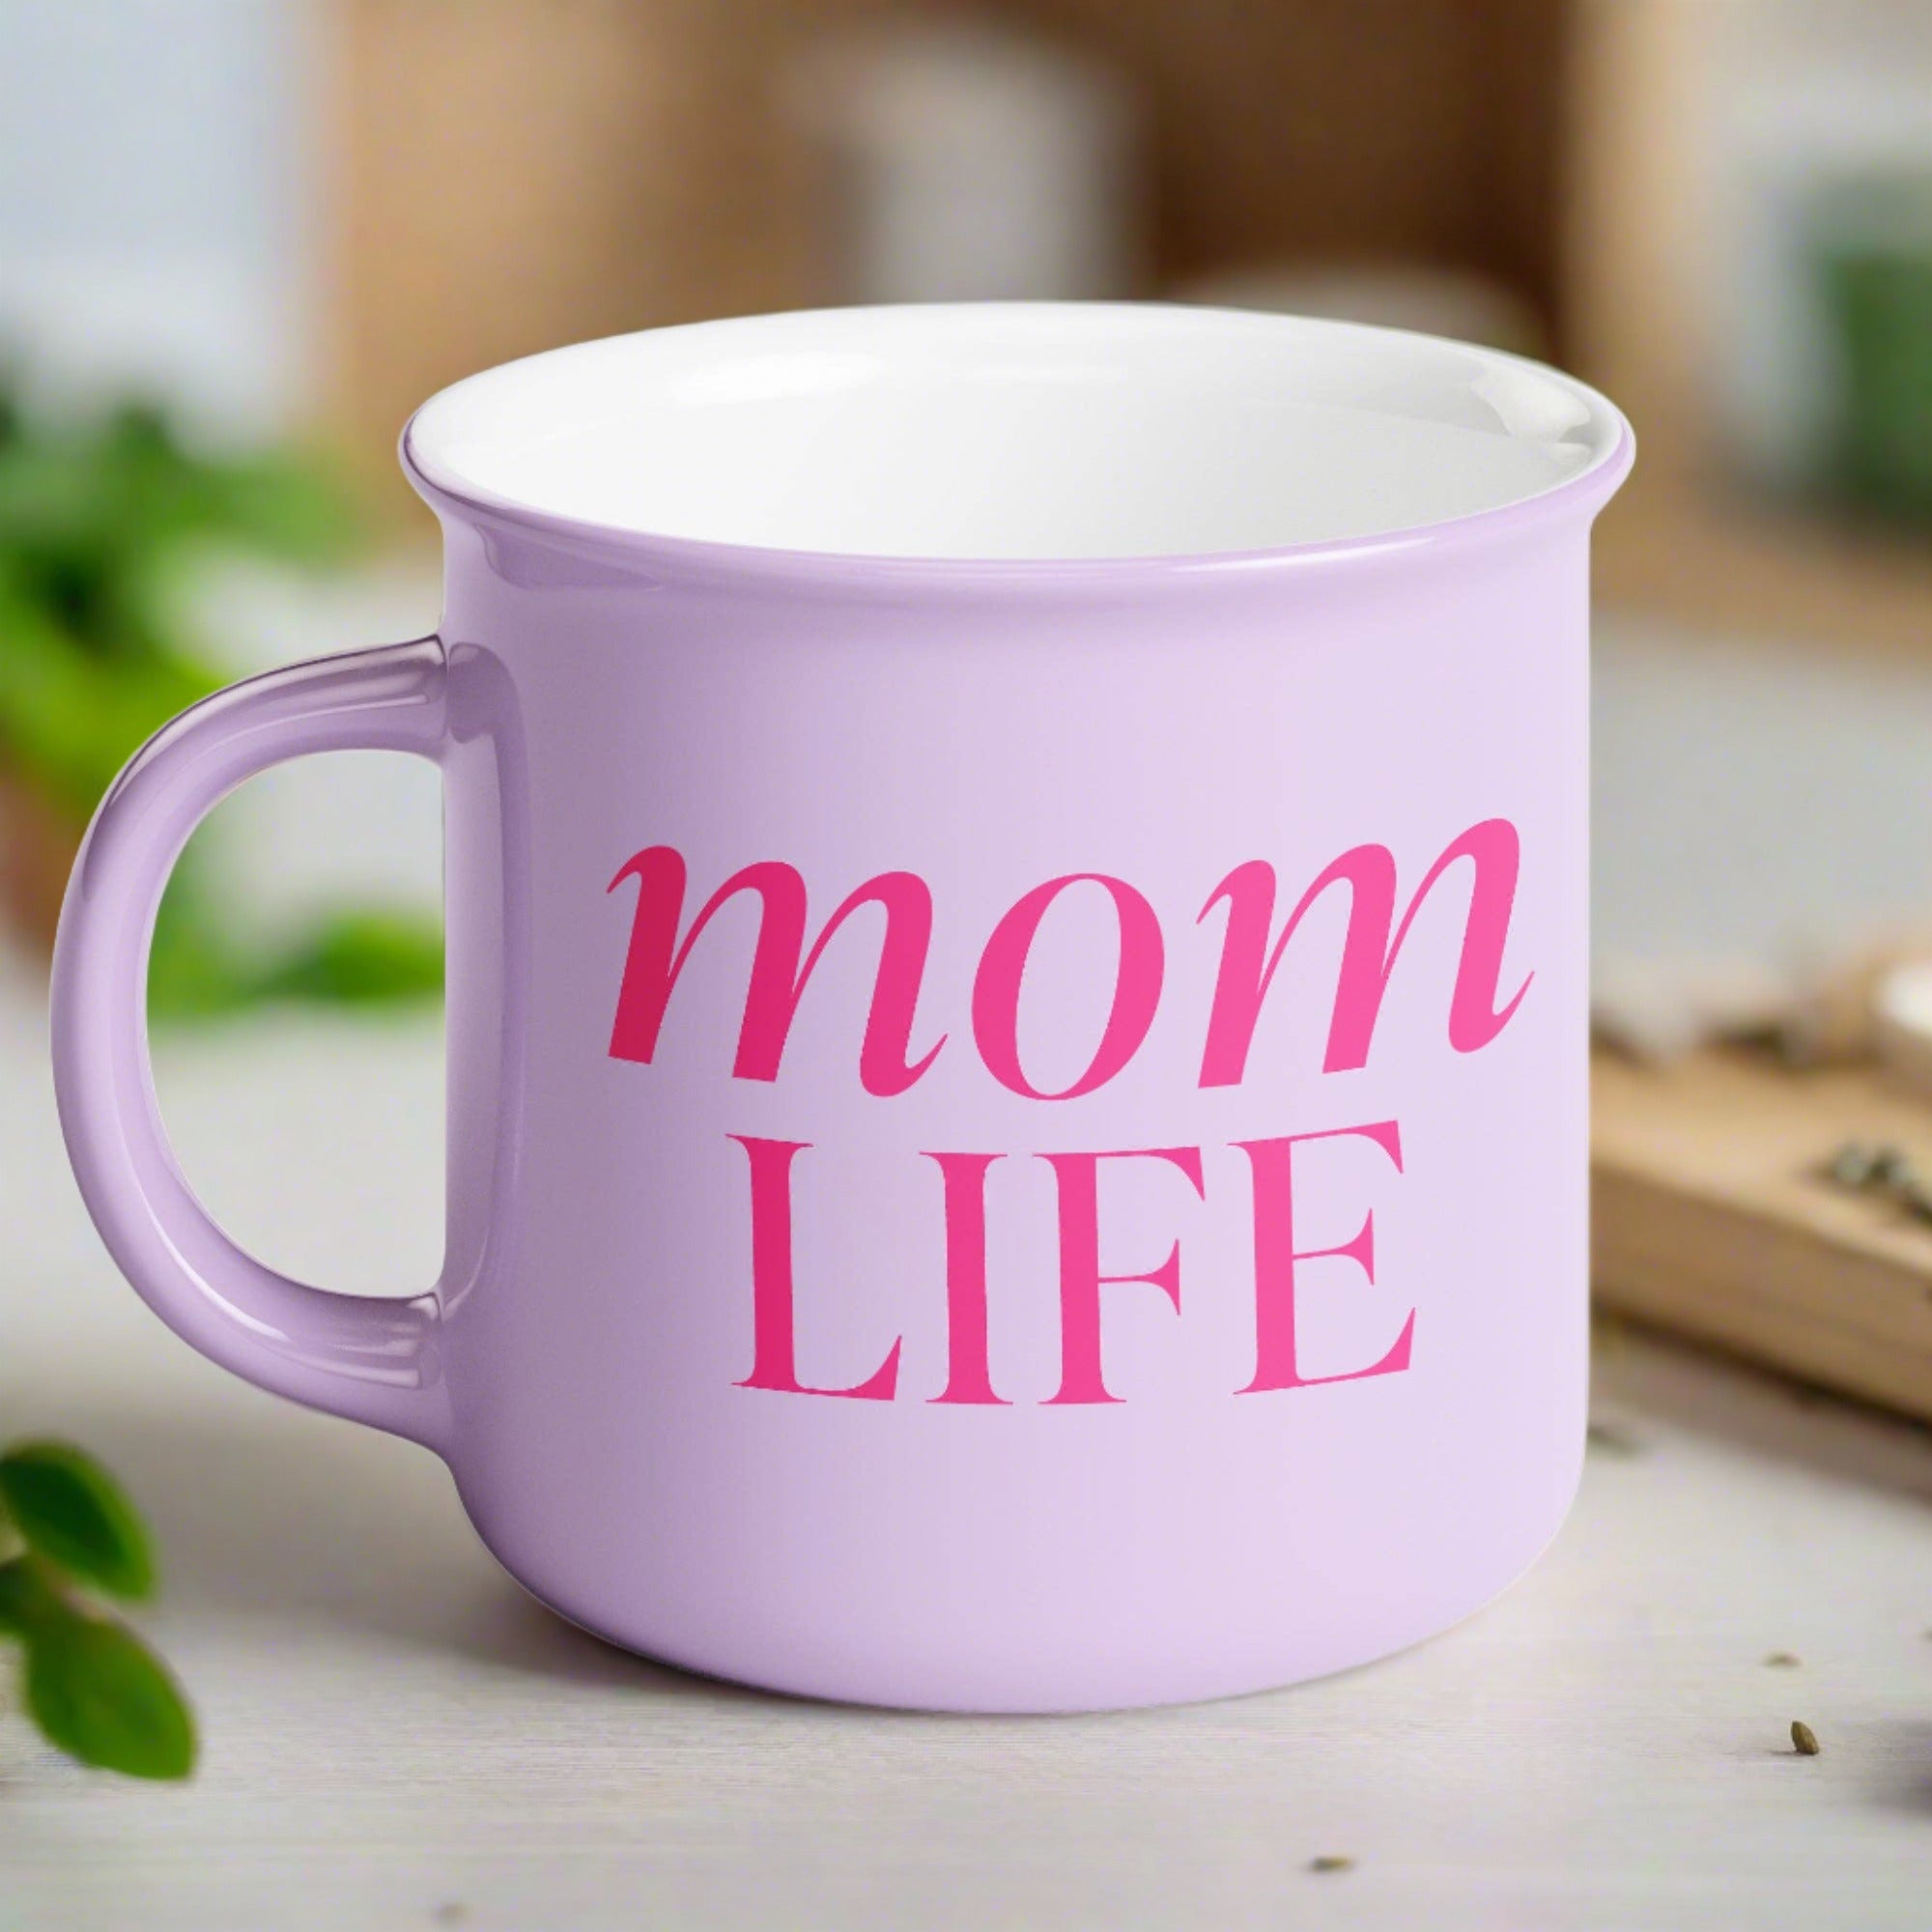 Mom Life 11 oz Campfire Coffee Mug - Mother's Day